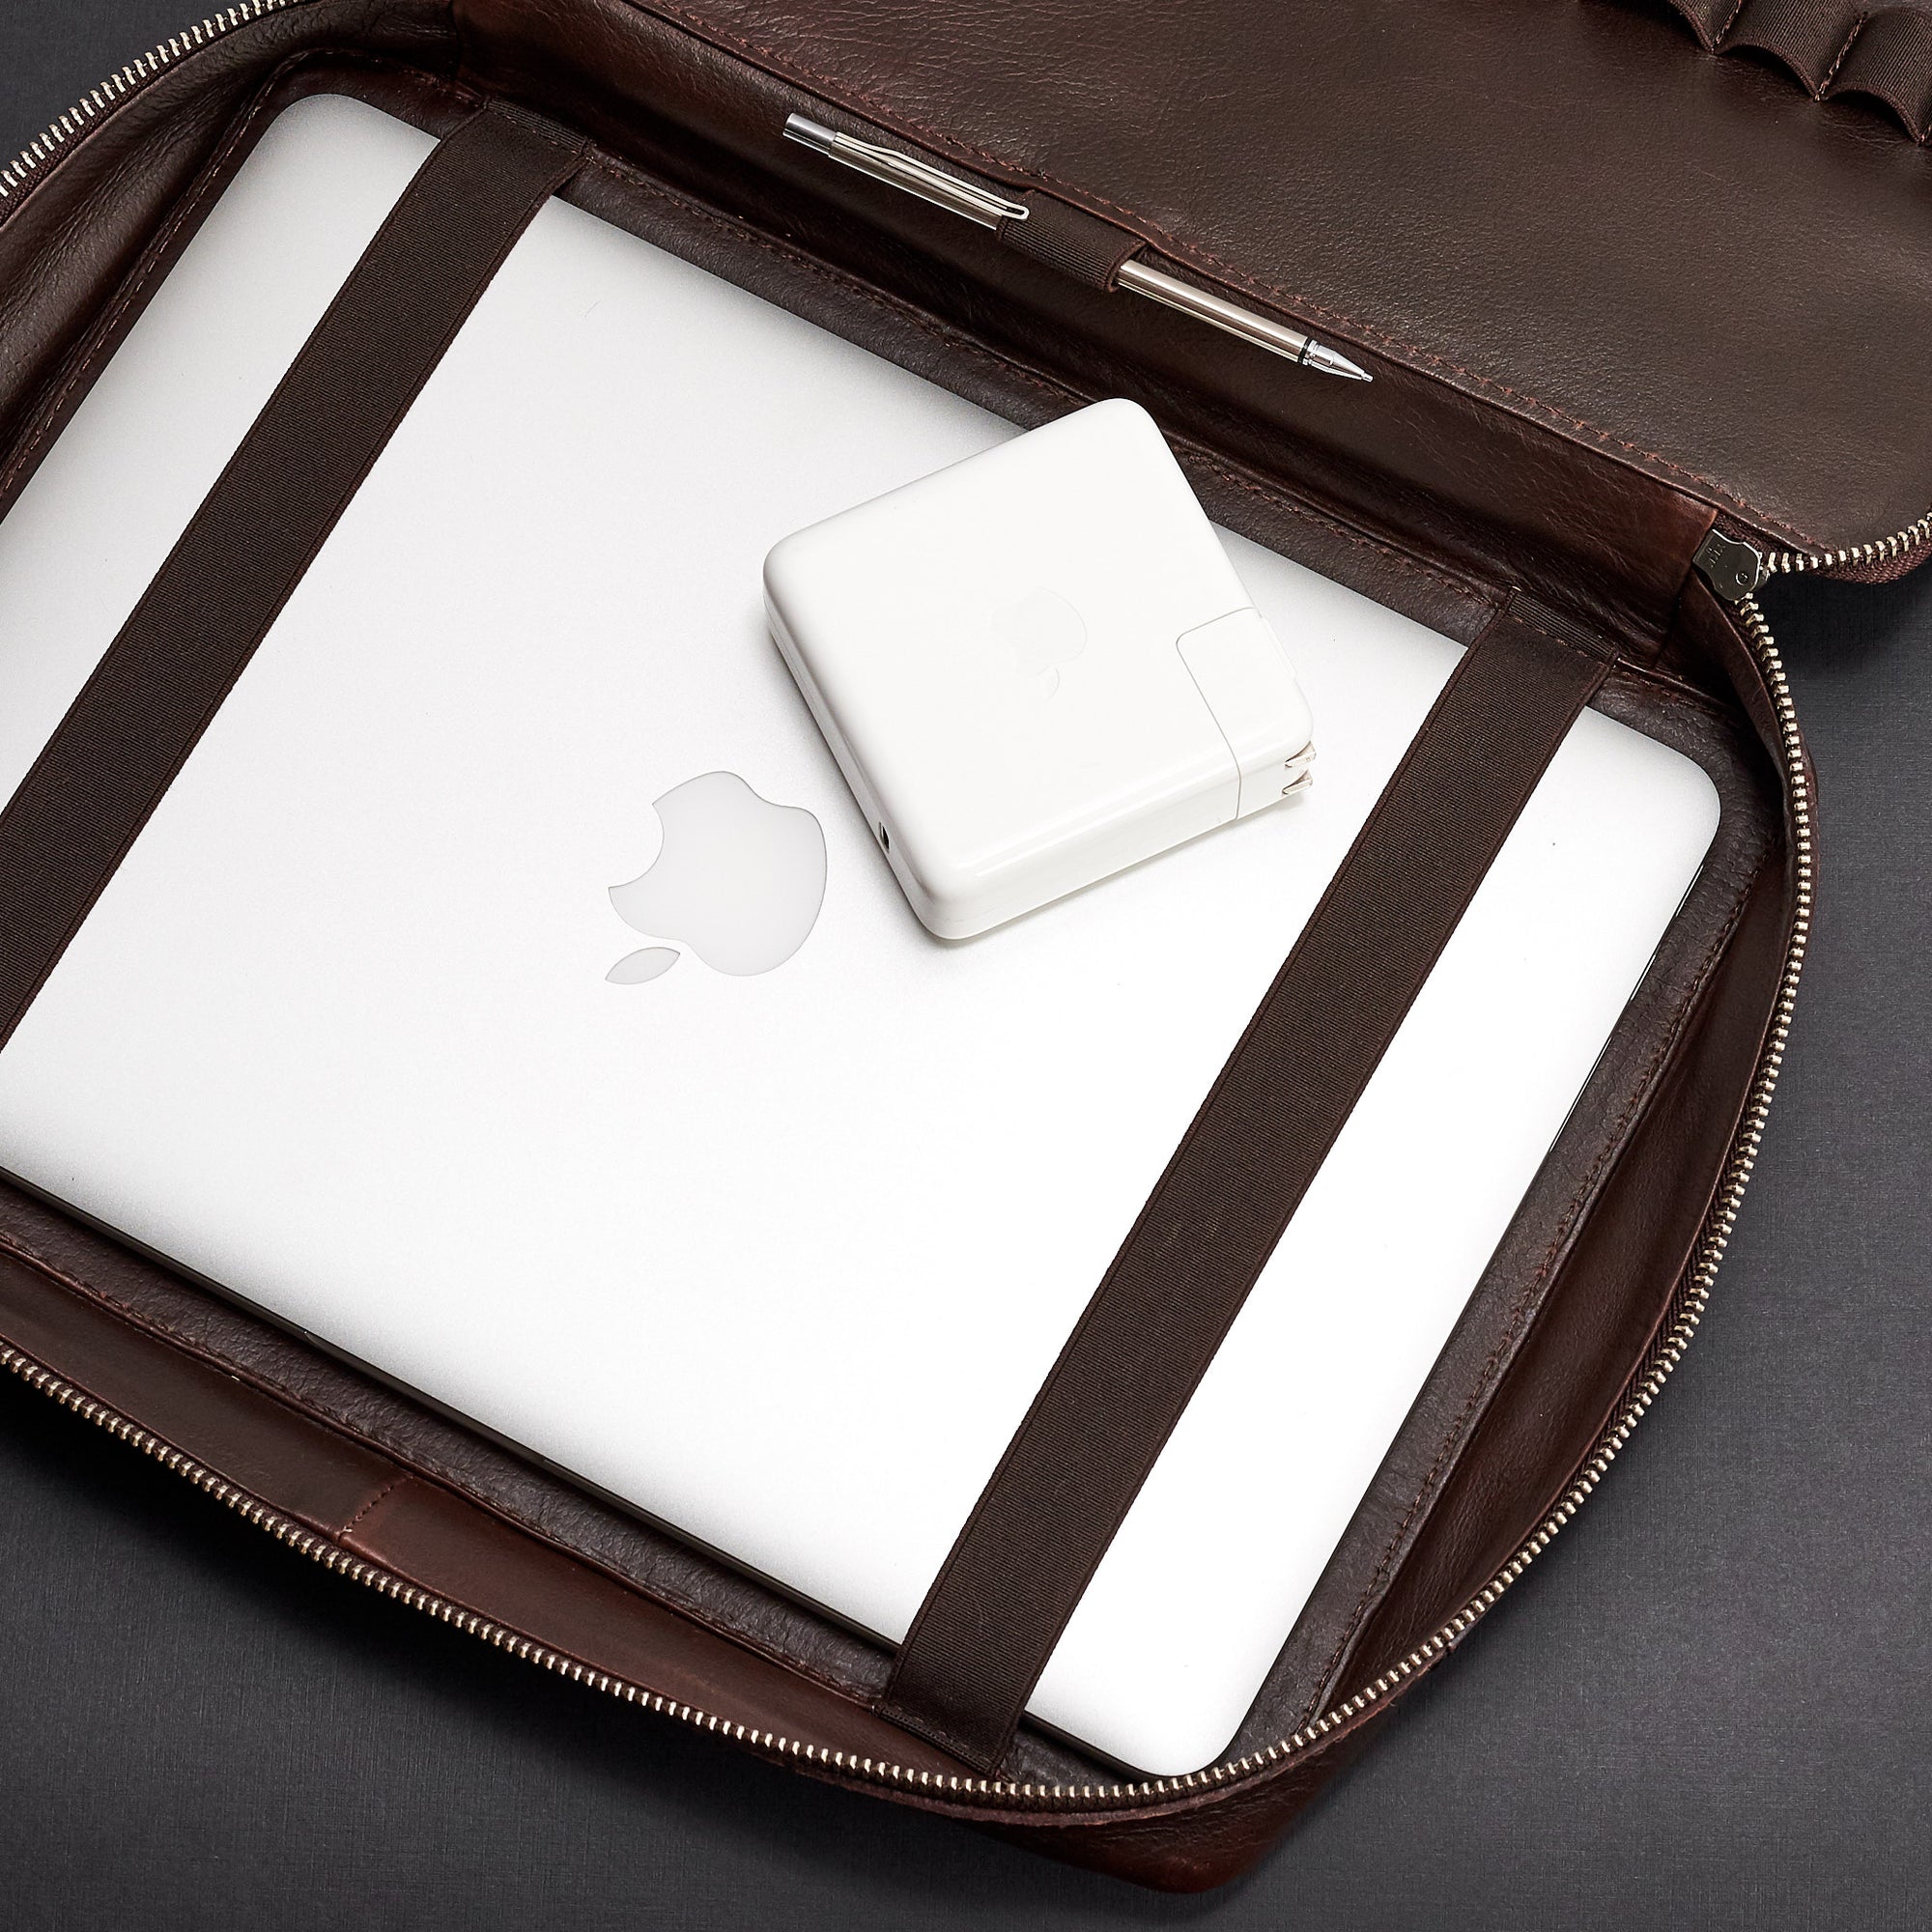 Macbook tech bags. Dark brown electronic organizer by Capra Leather